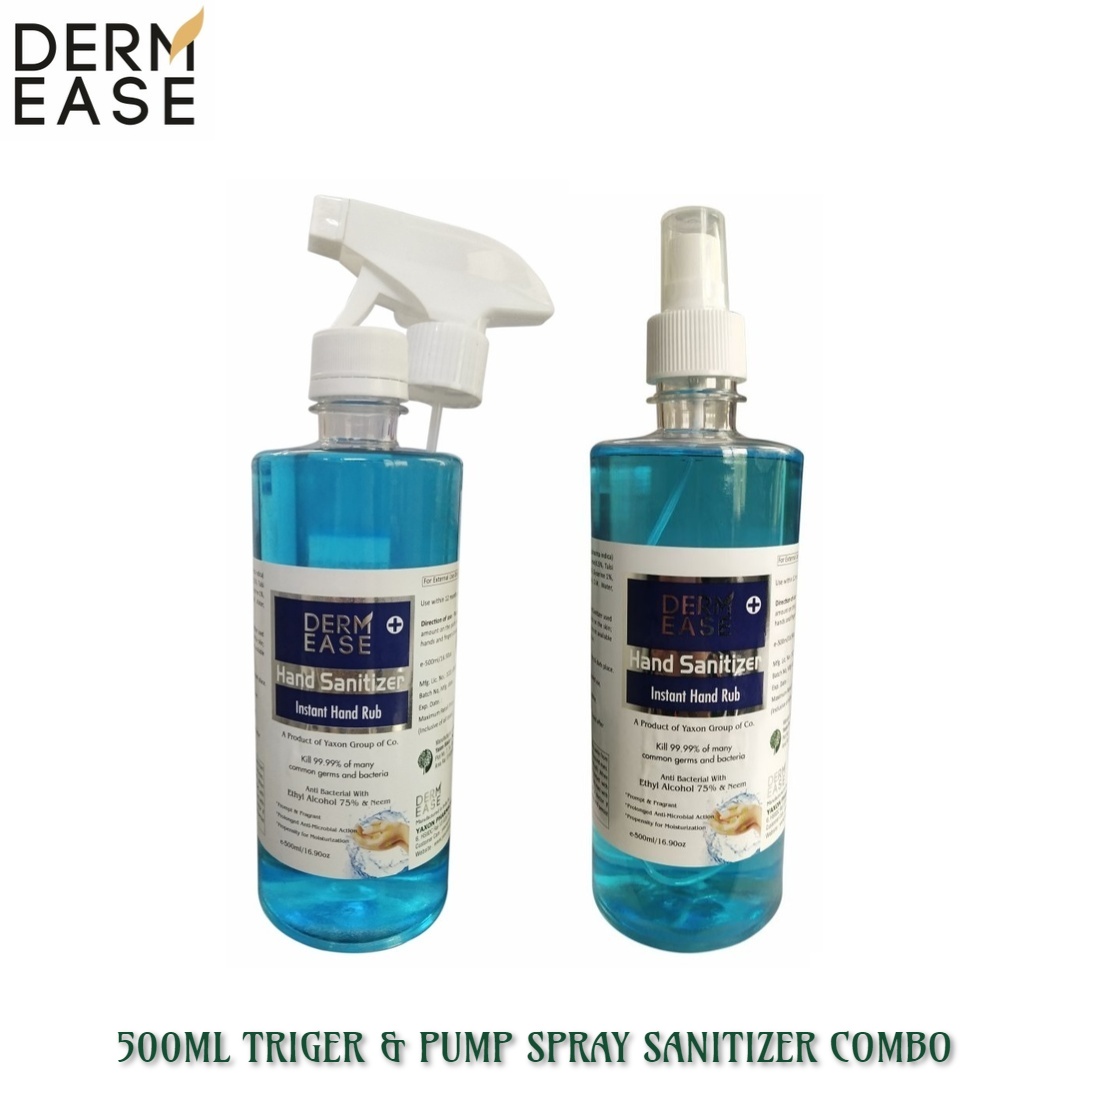 DERM EASE MIST Sanitizer 500ml Triger & 500ml Pump Spray Combo